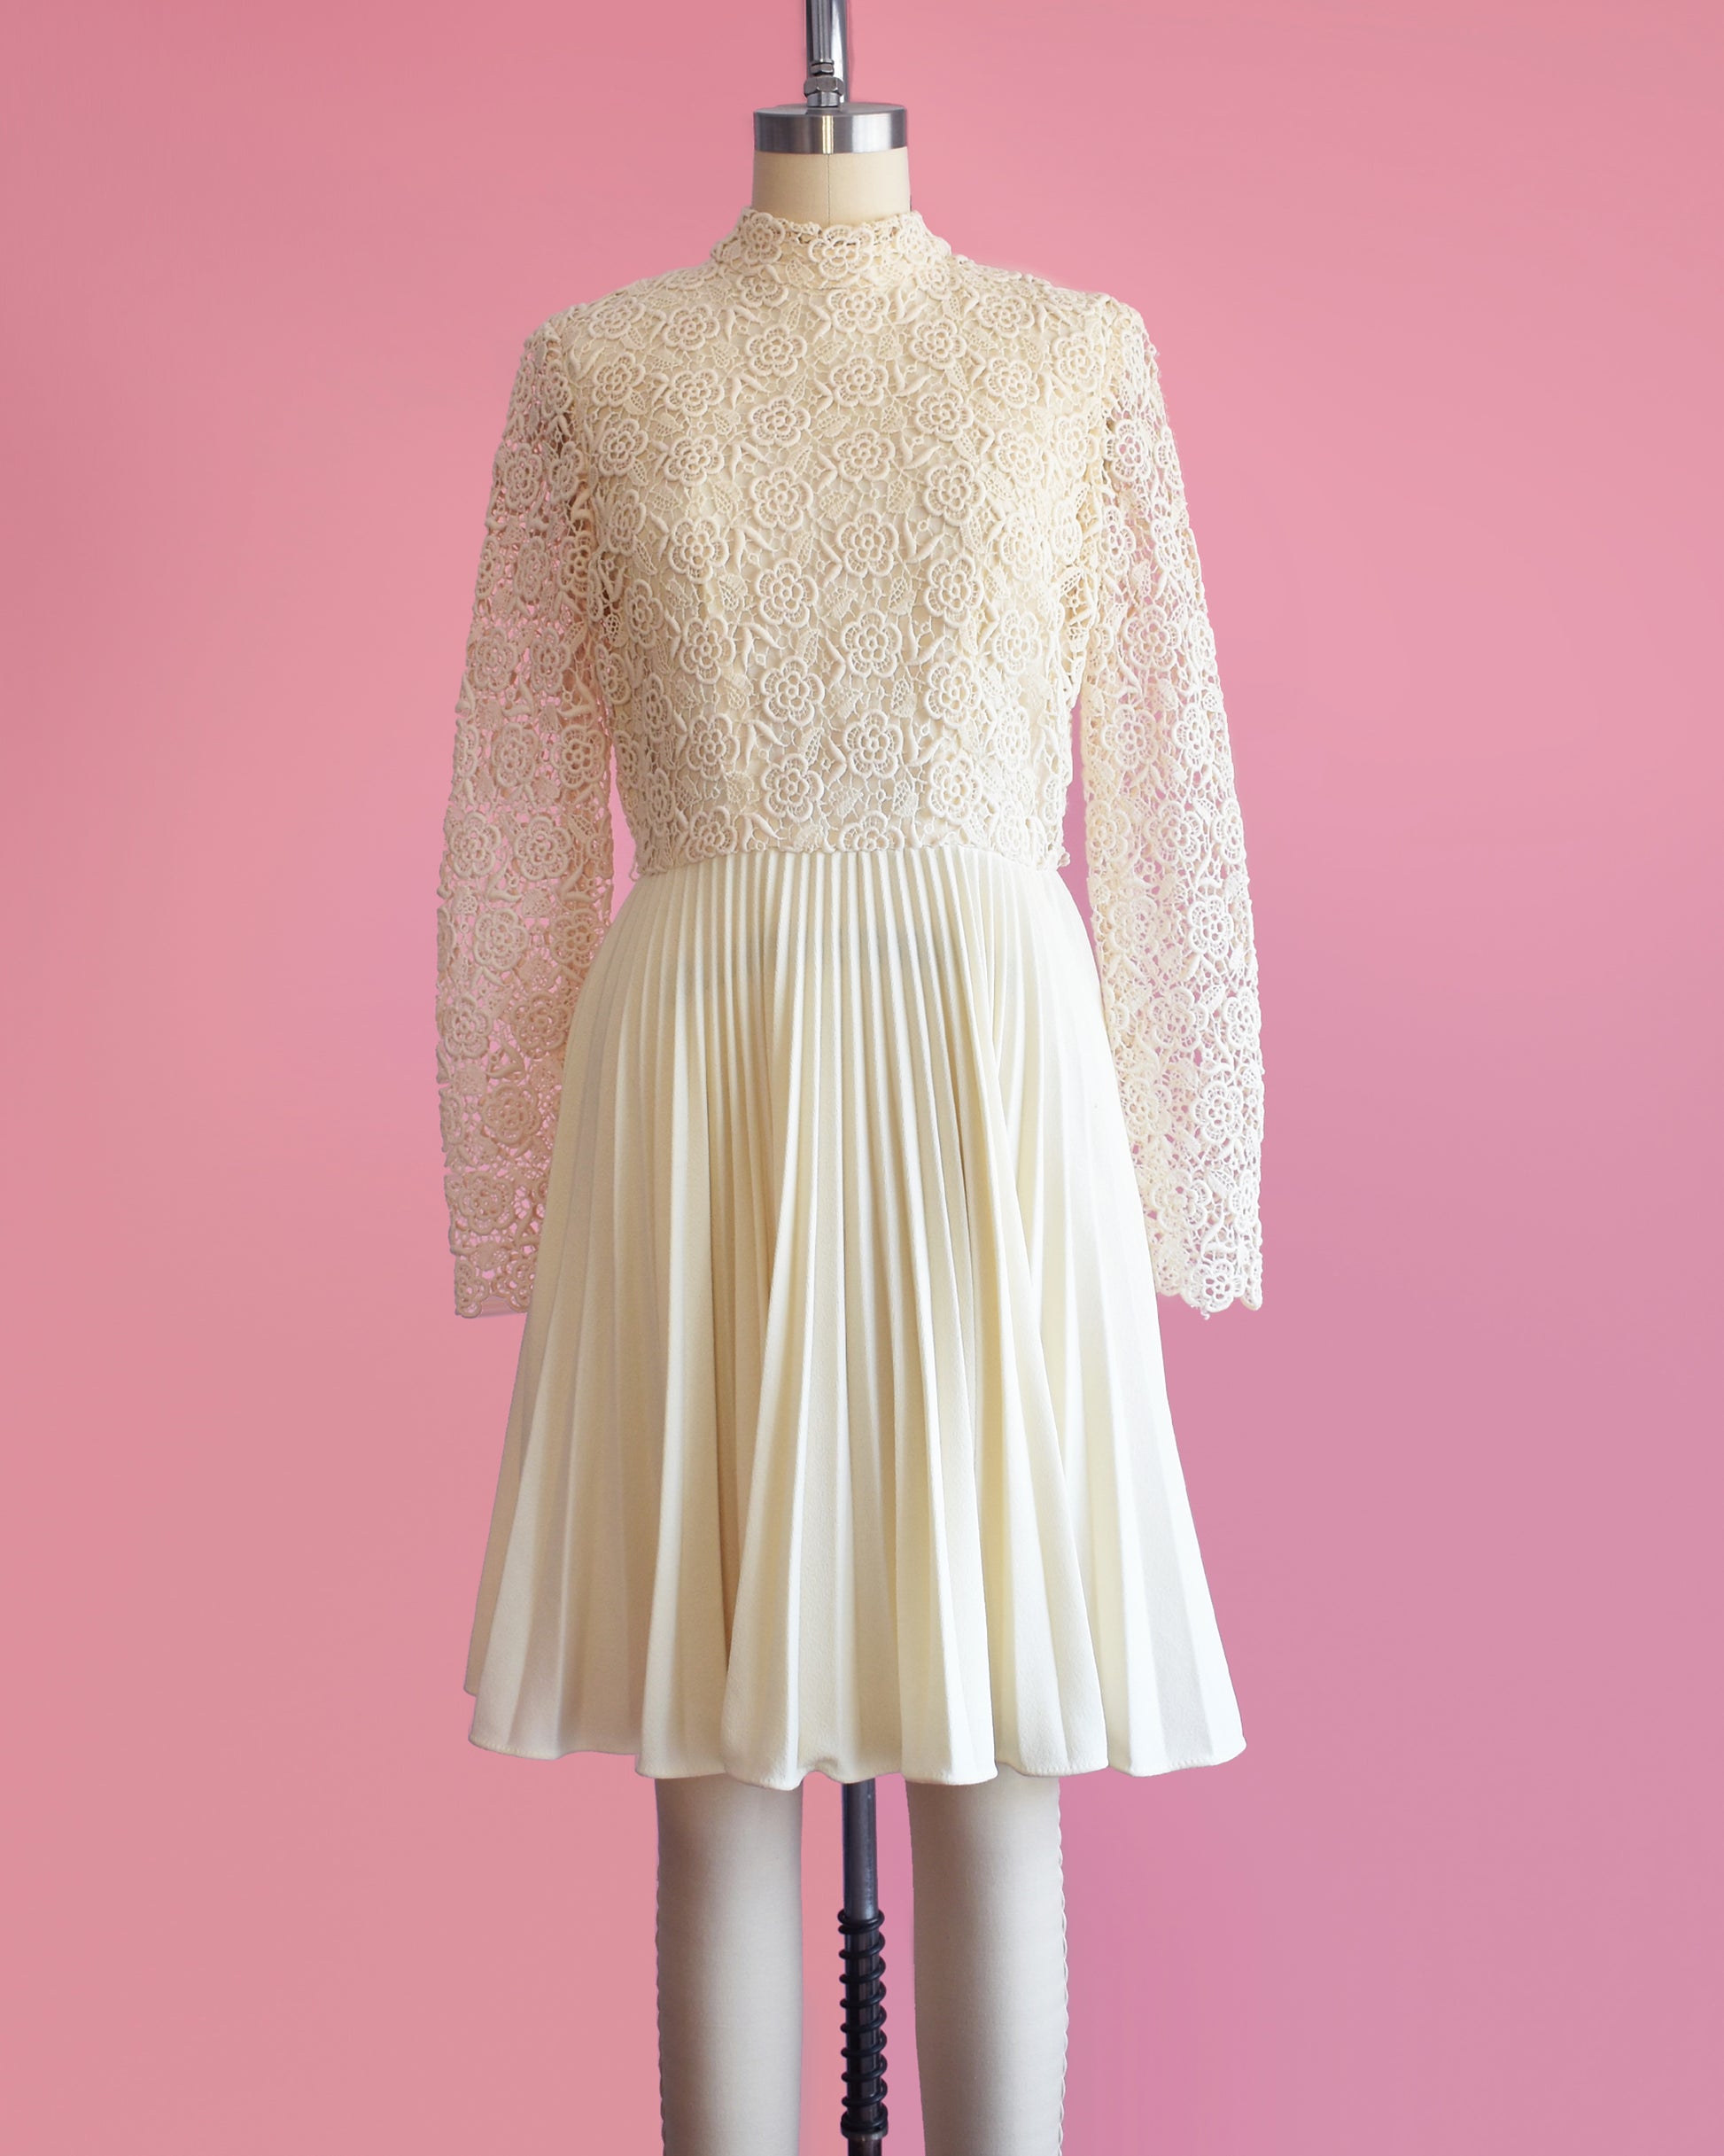 a vintage 1970s crochet floral lace pleated dress